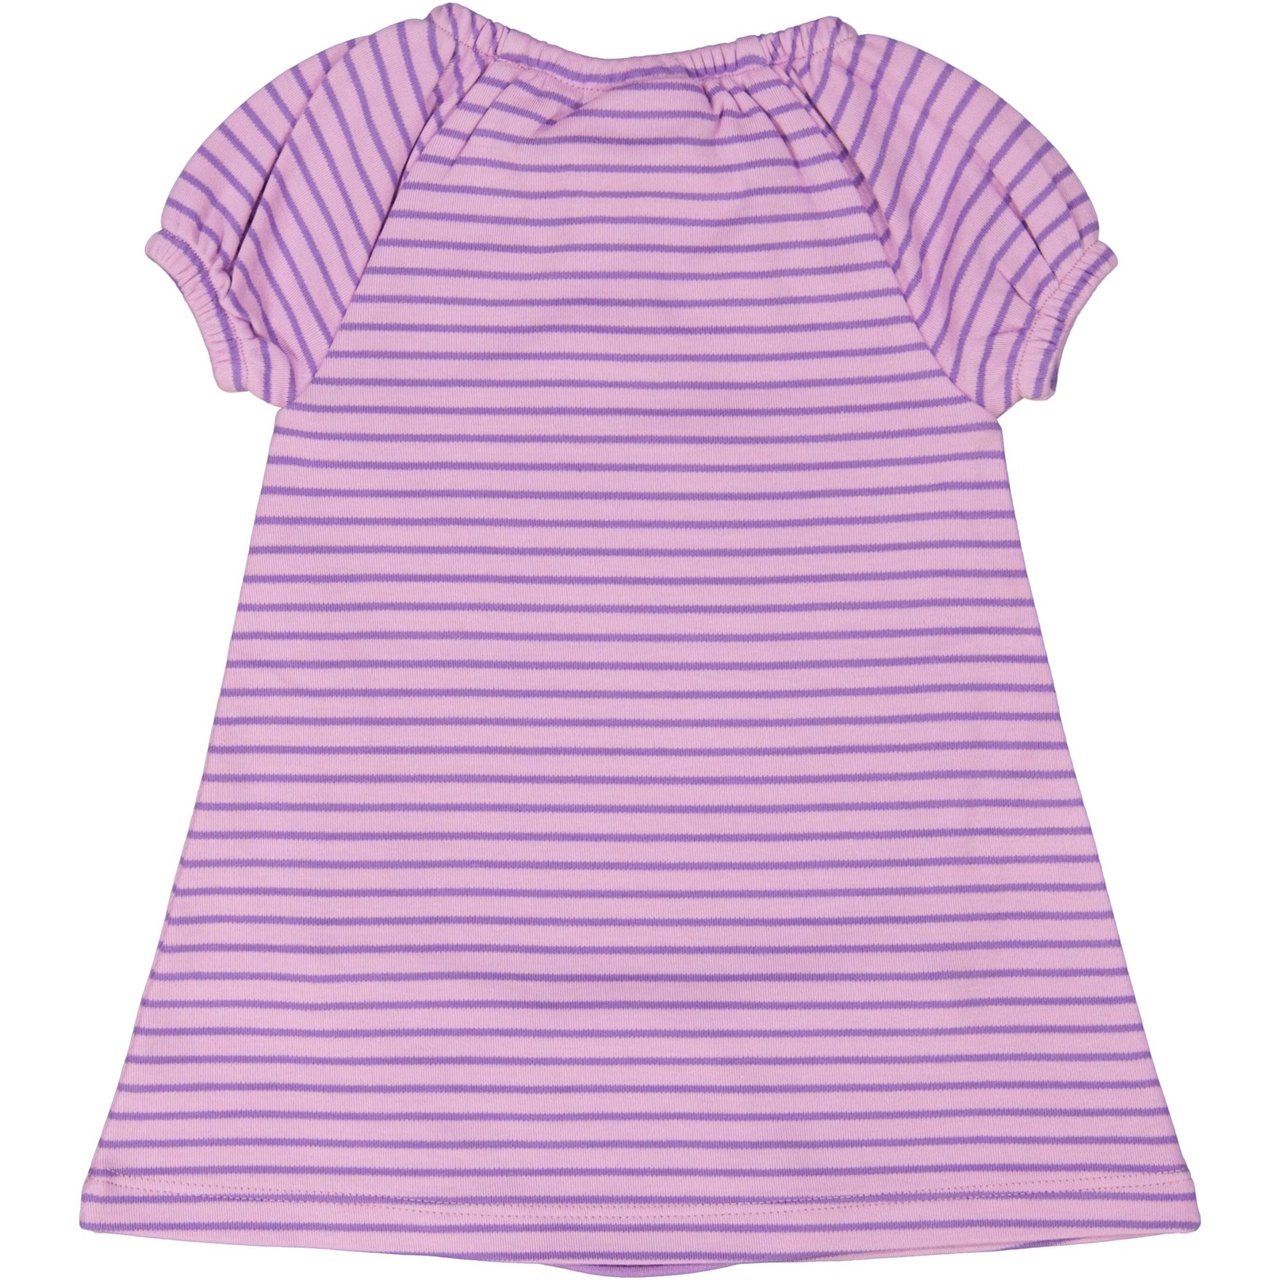 Singoalla dress L.purple/purple  62/68